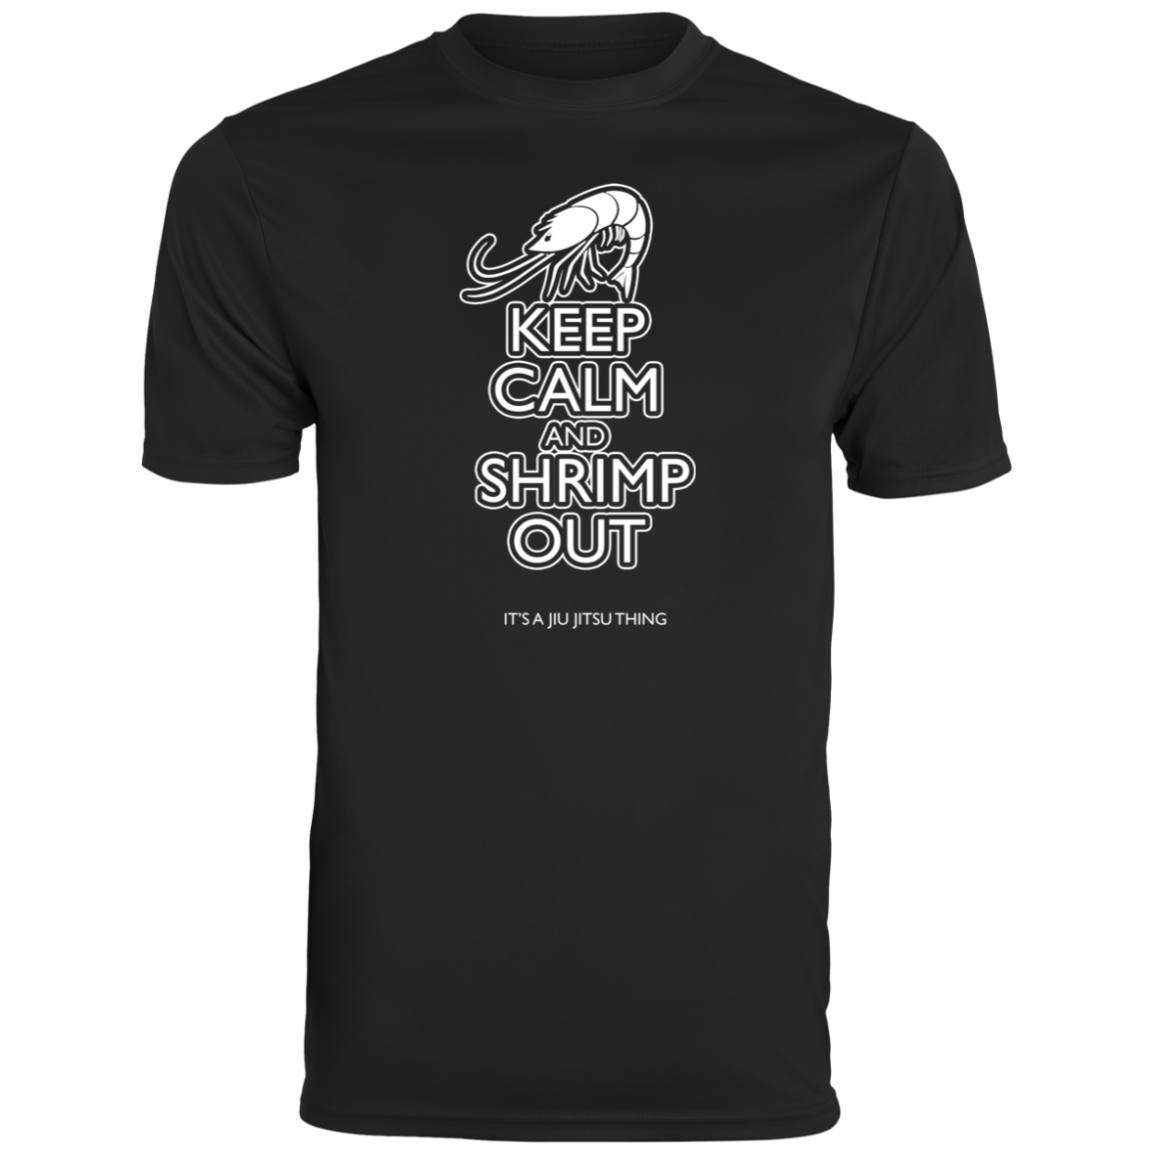 Artichoke Fight Gear Custom Design #12. Keep Calm and Shrimp Out. Men's Moisture-Wicking Tee